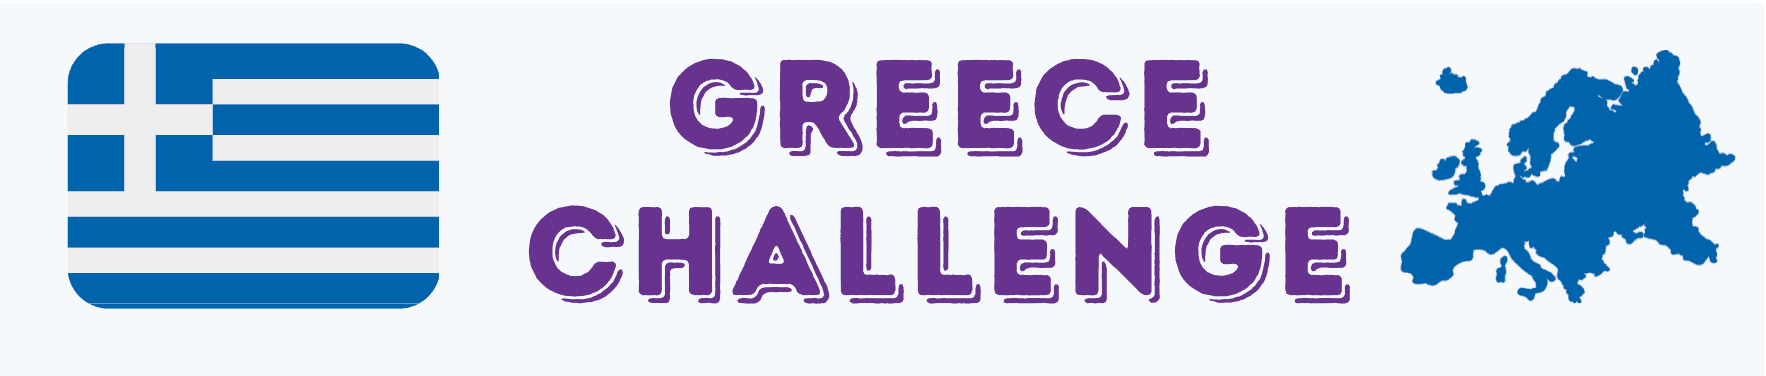 challenge-greece